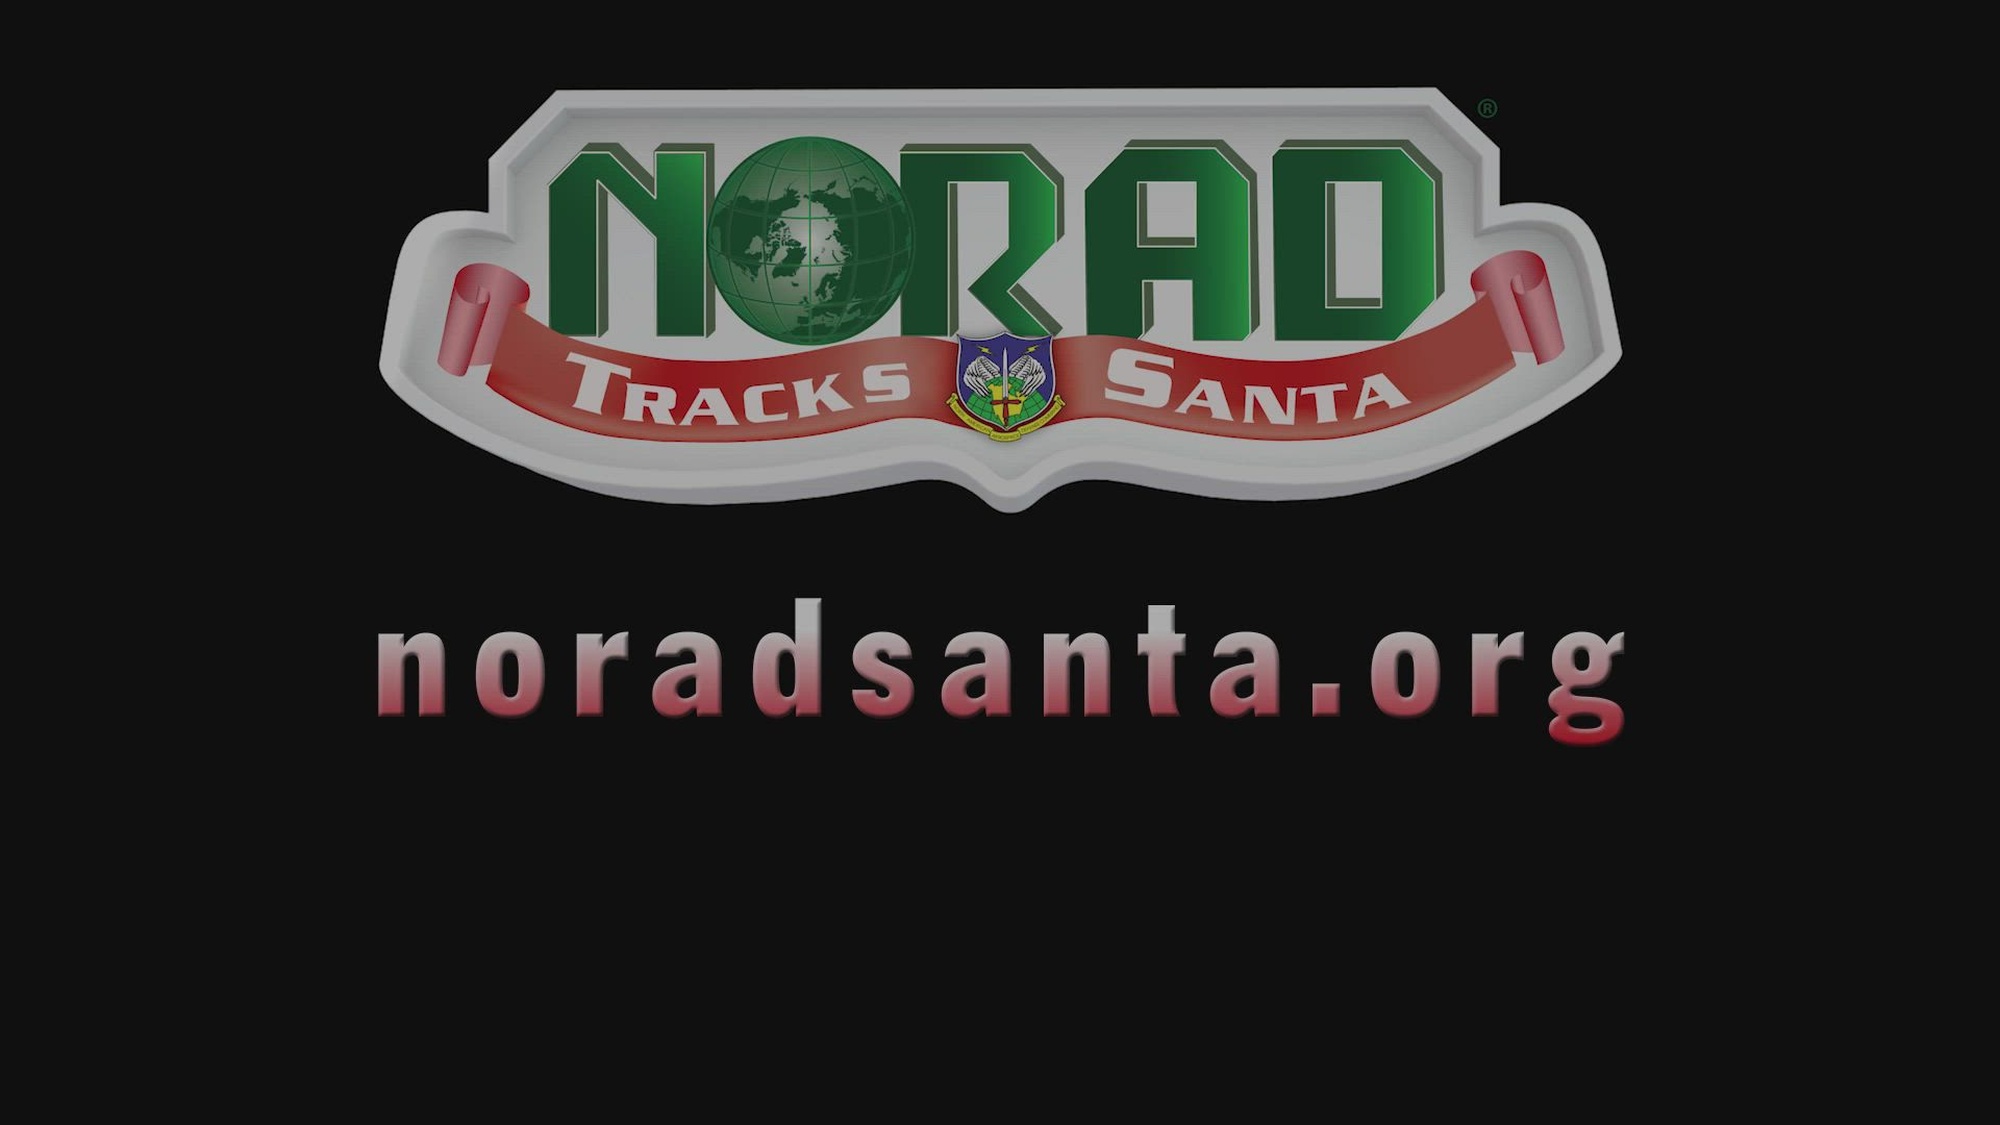 The 2022 NORAD Tracks Santa video promotes the December 1st launch date of the NORAD Tracks Santa website, www.noradsanta.org.